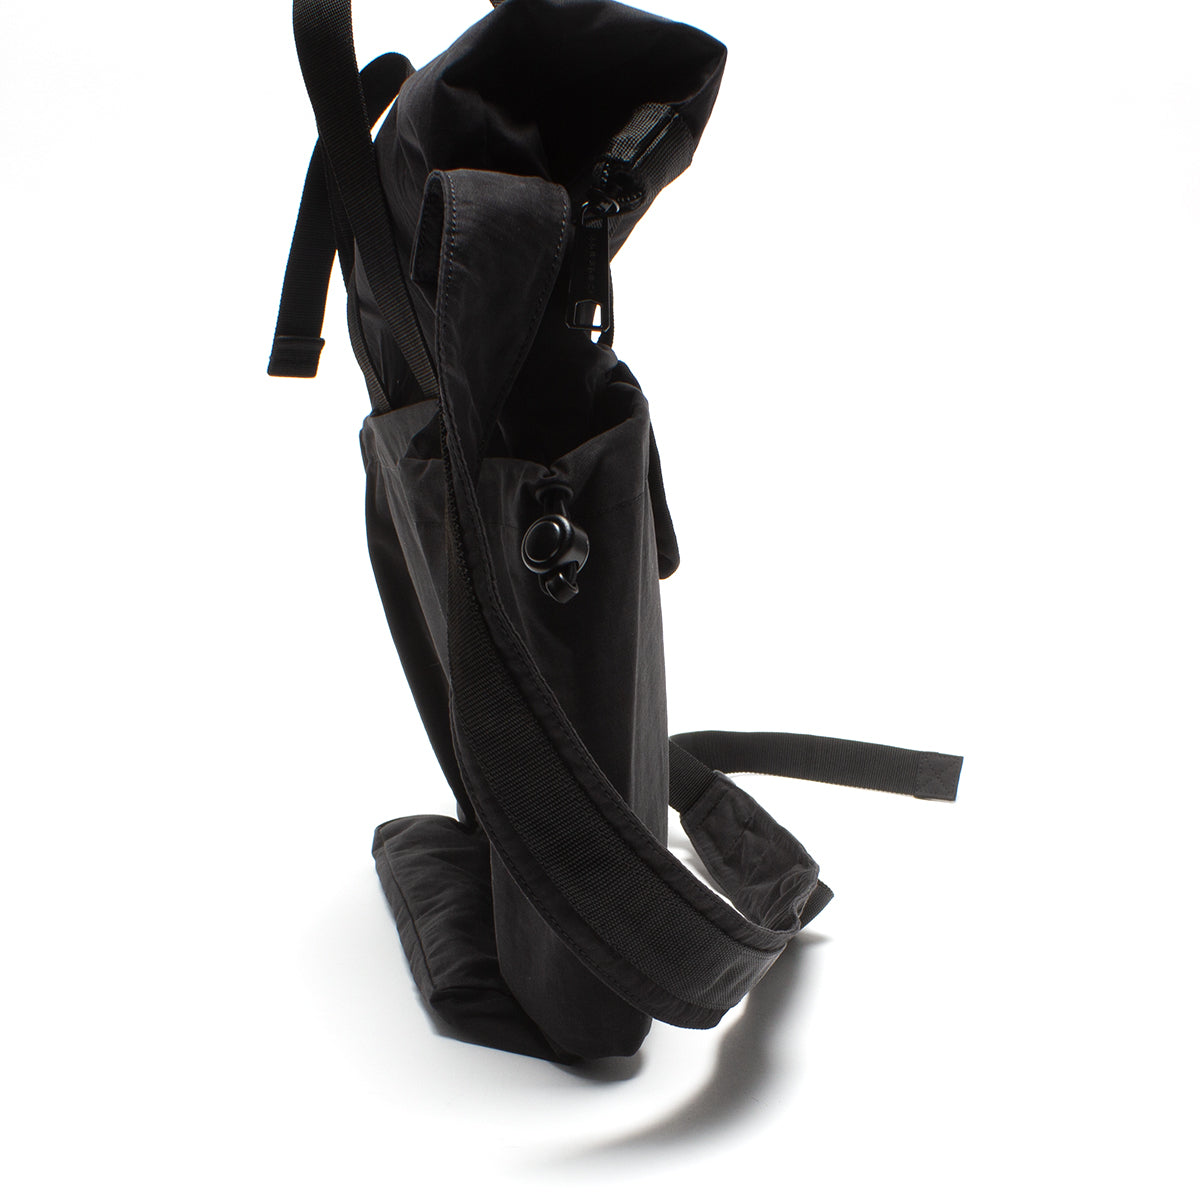 Carhartt WIP | Haste Tote Bag Style # I032190-89 Color : Black